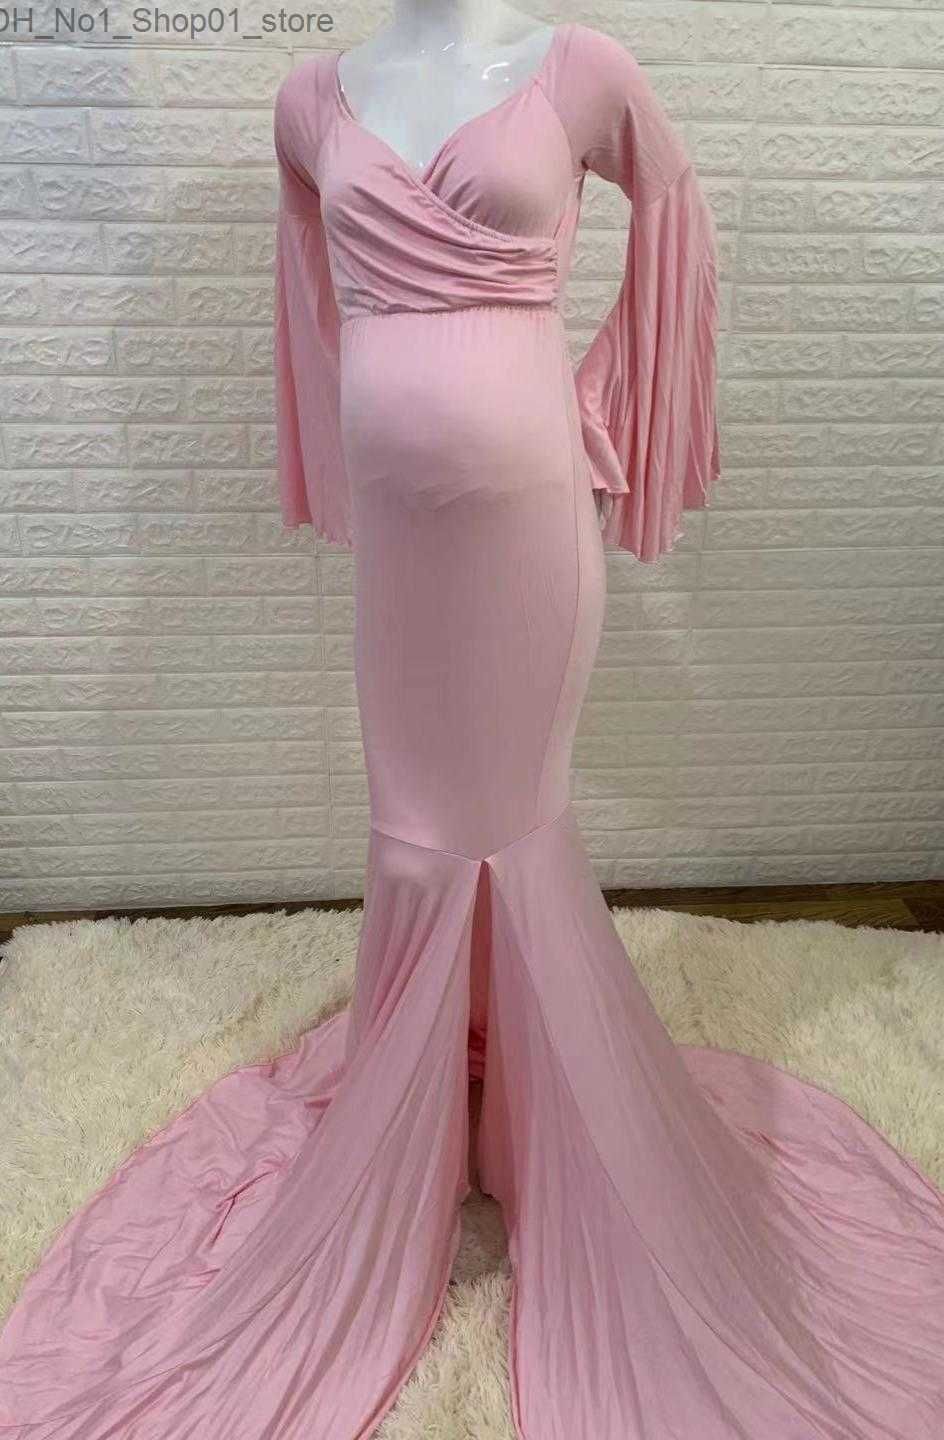 1x pink dress